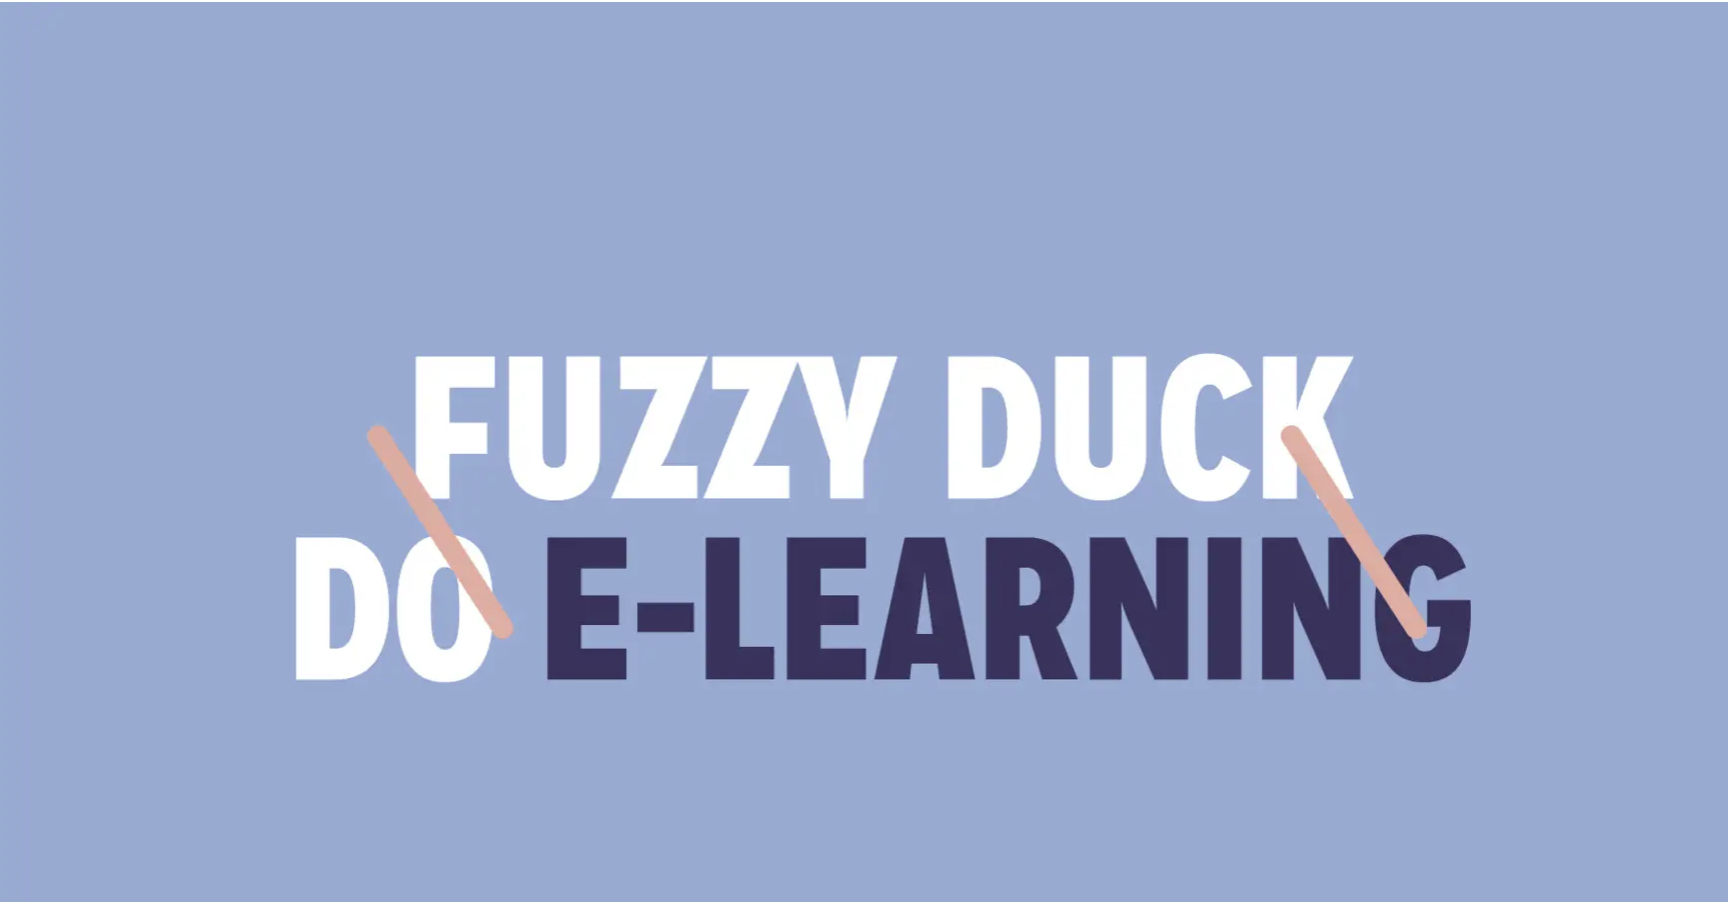 Fuzzy Duck do e-learning